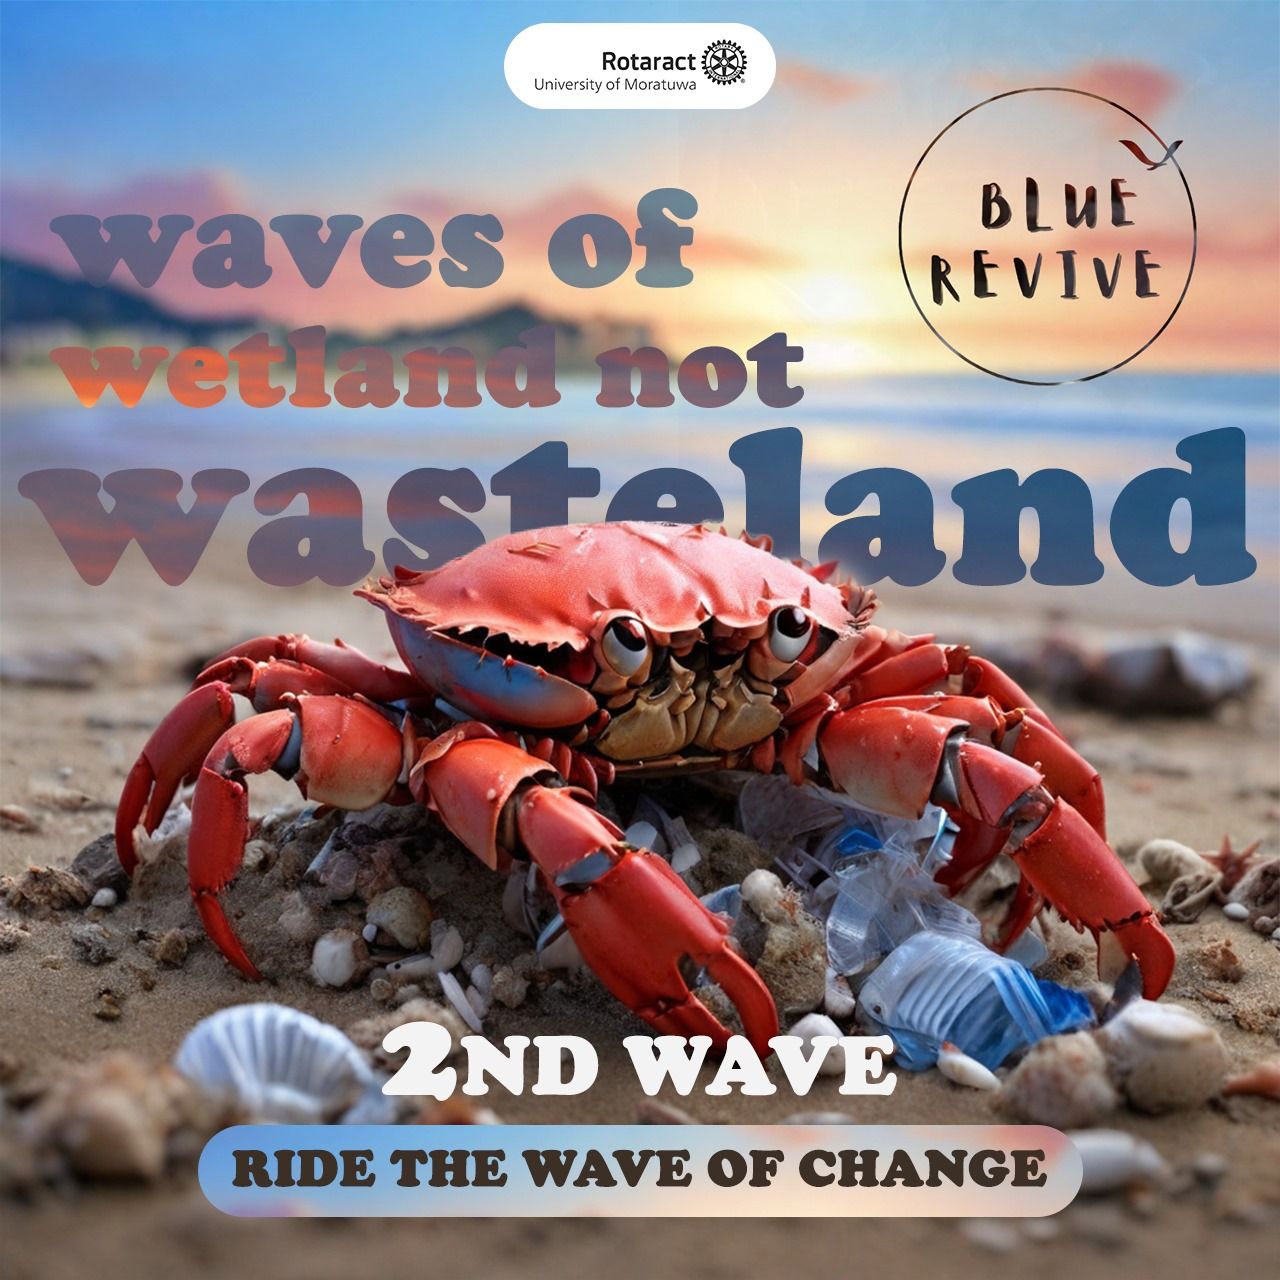 Blue Revive: Making Waves for a Cleaner Coastal Line